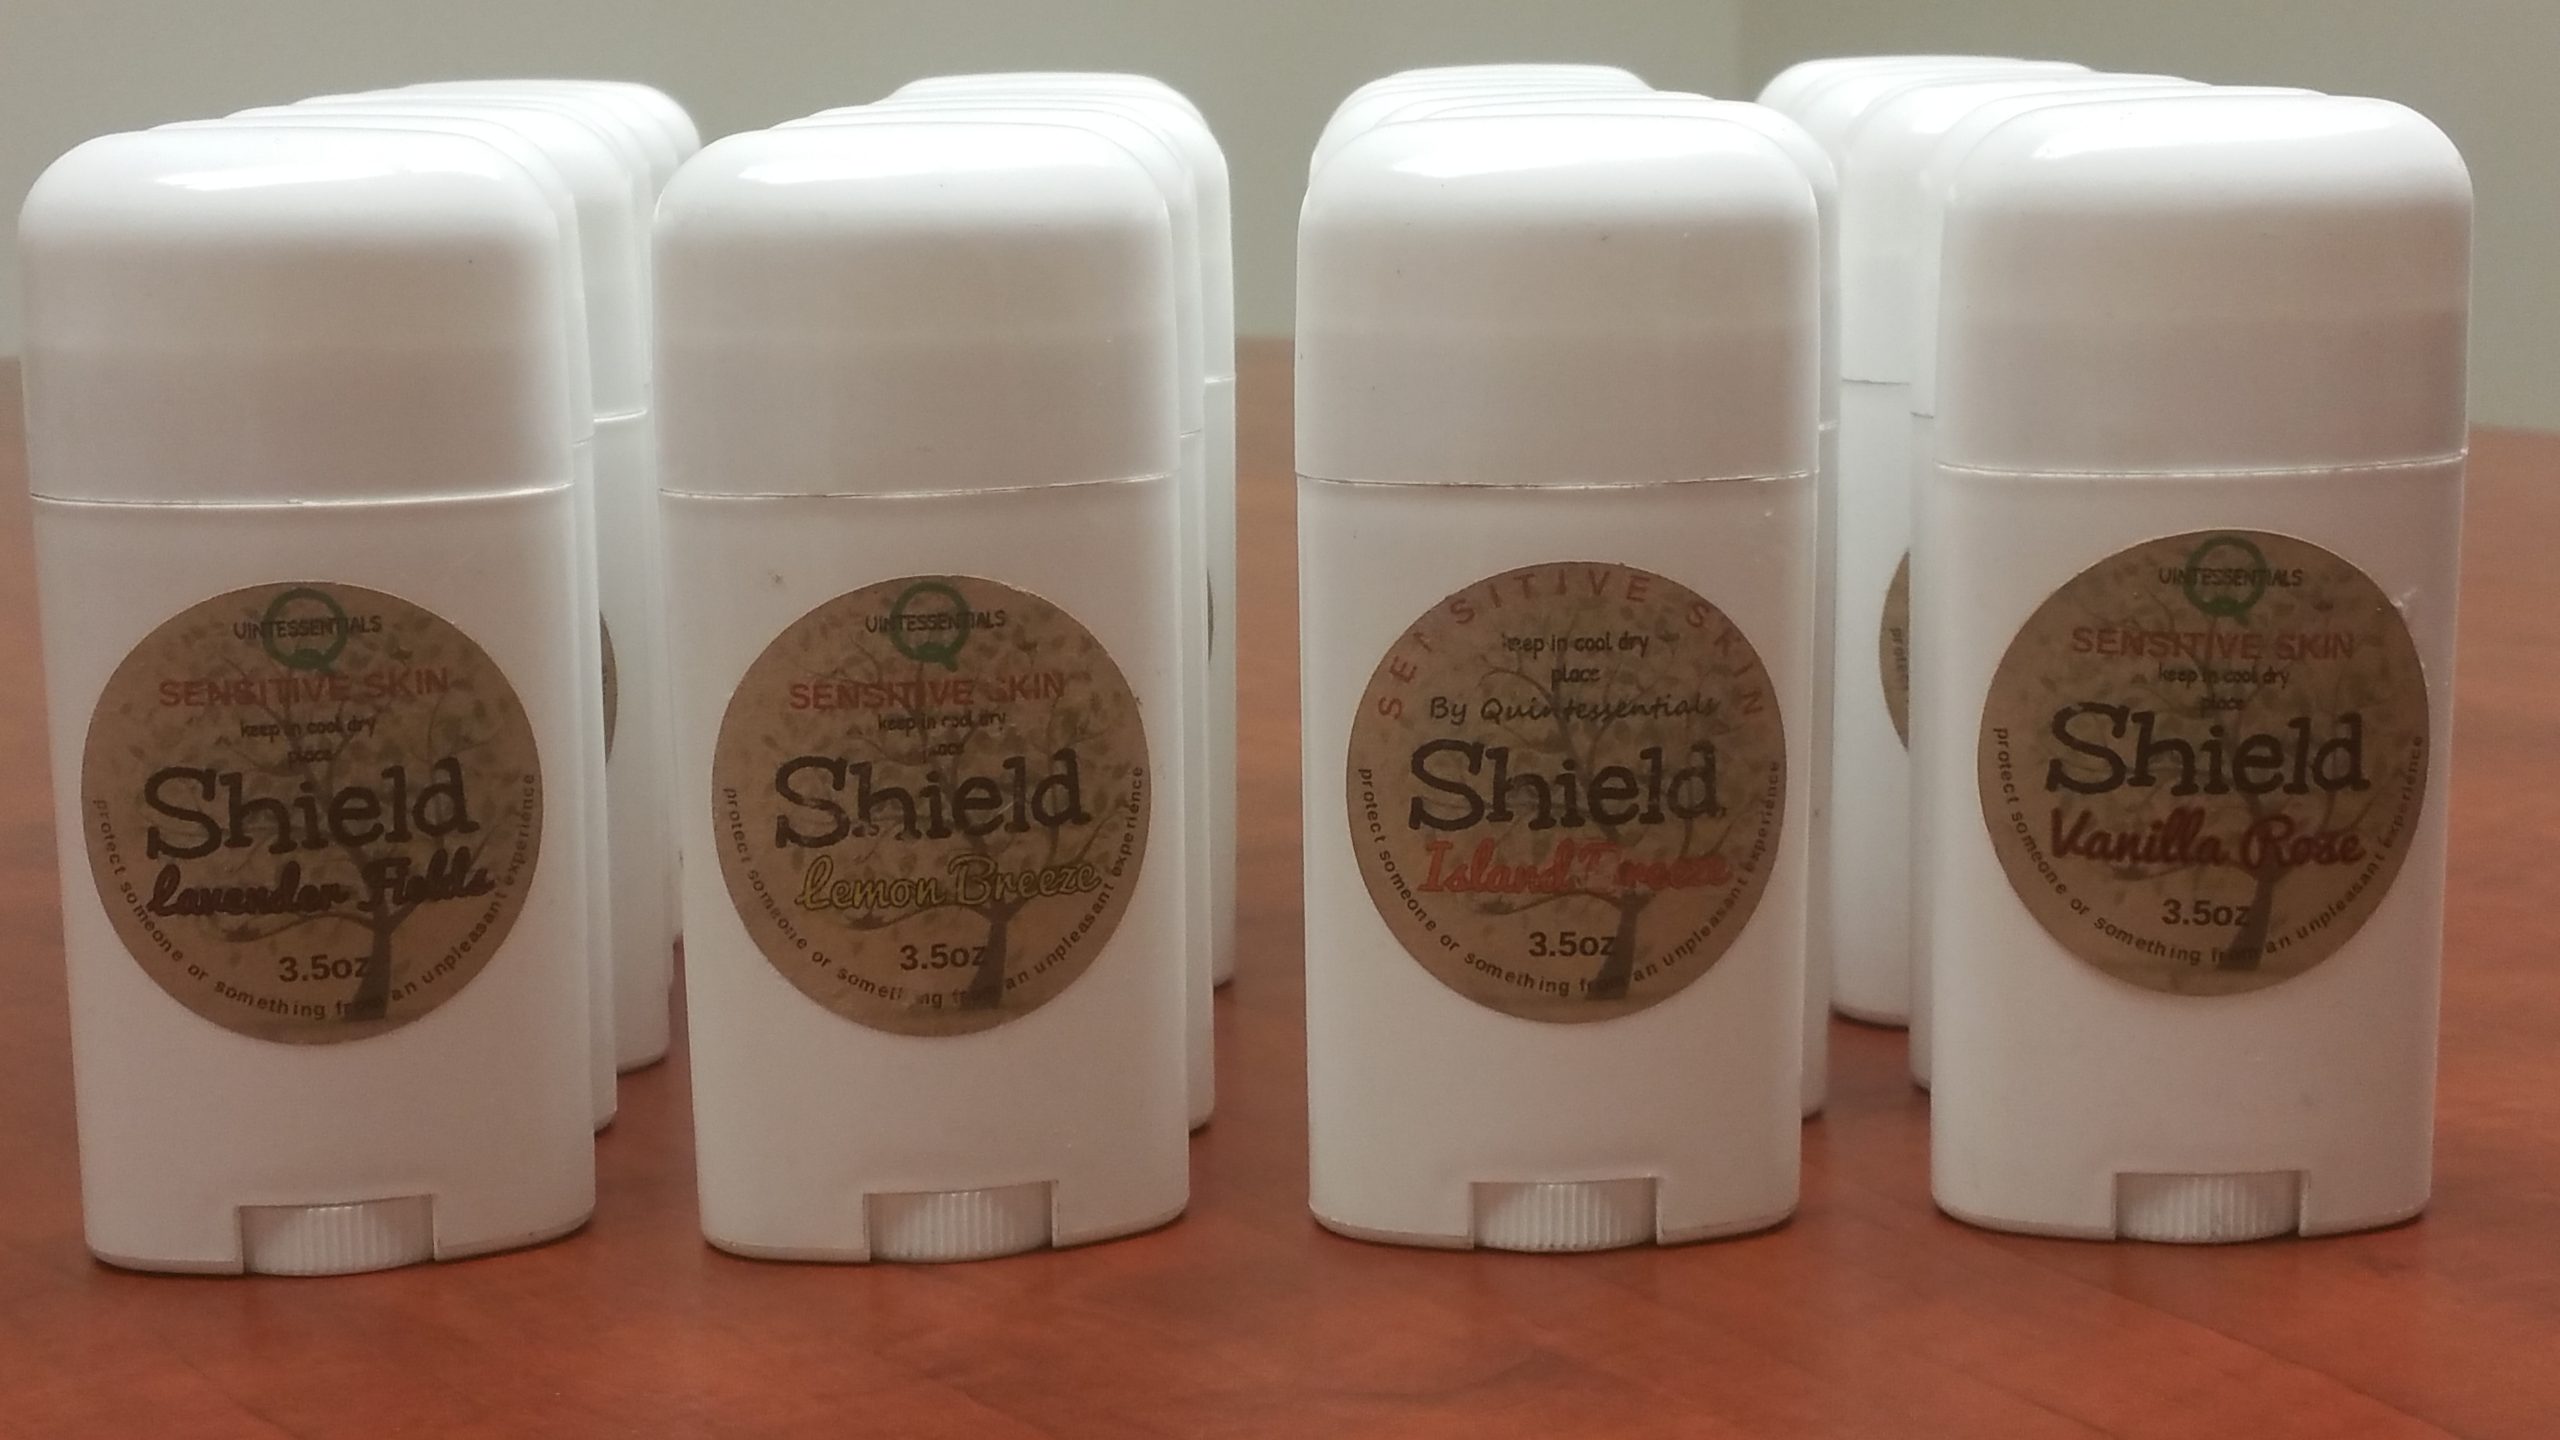 Shield Sensitive Skin(baking soda free)Deodorant